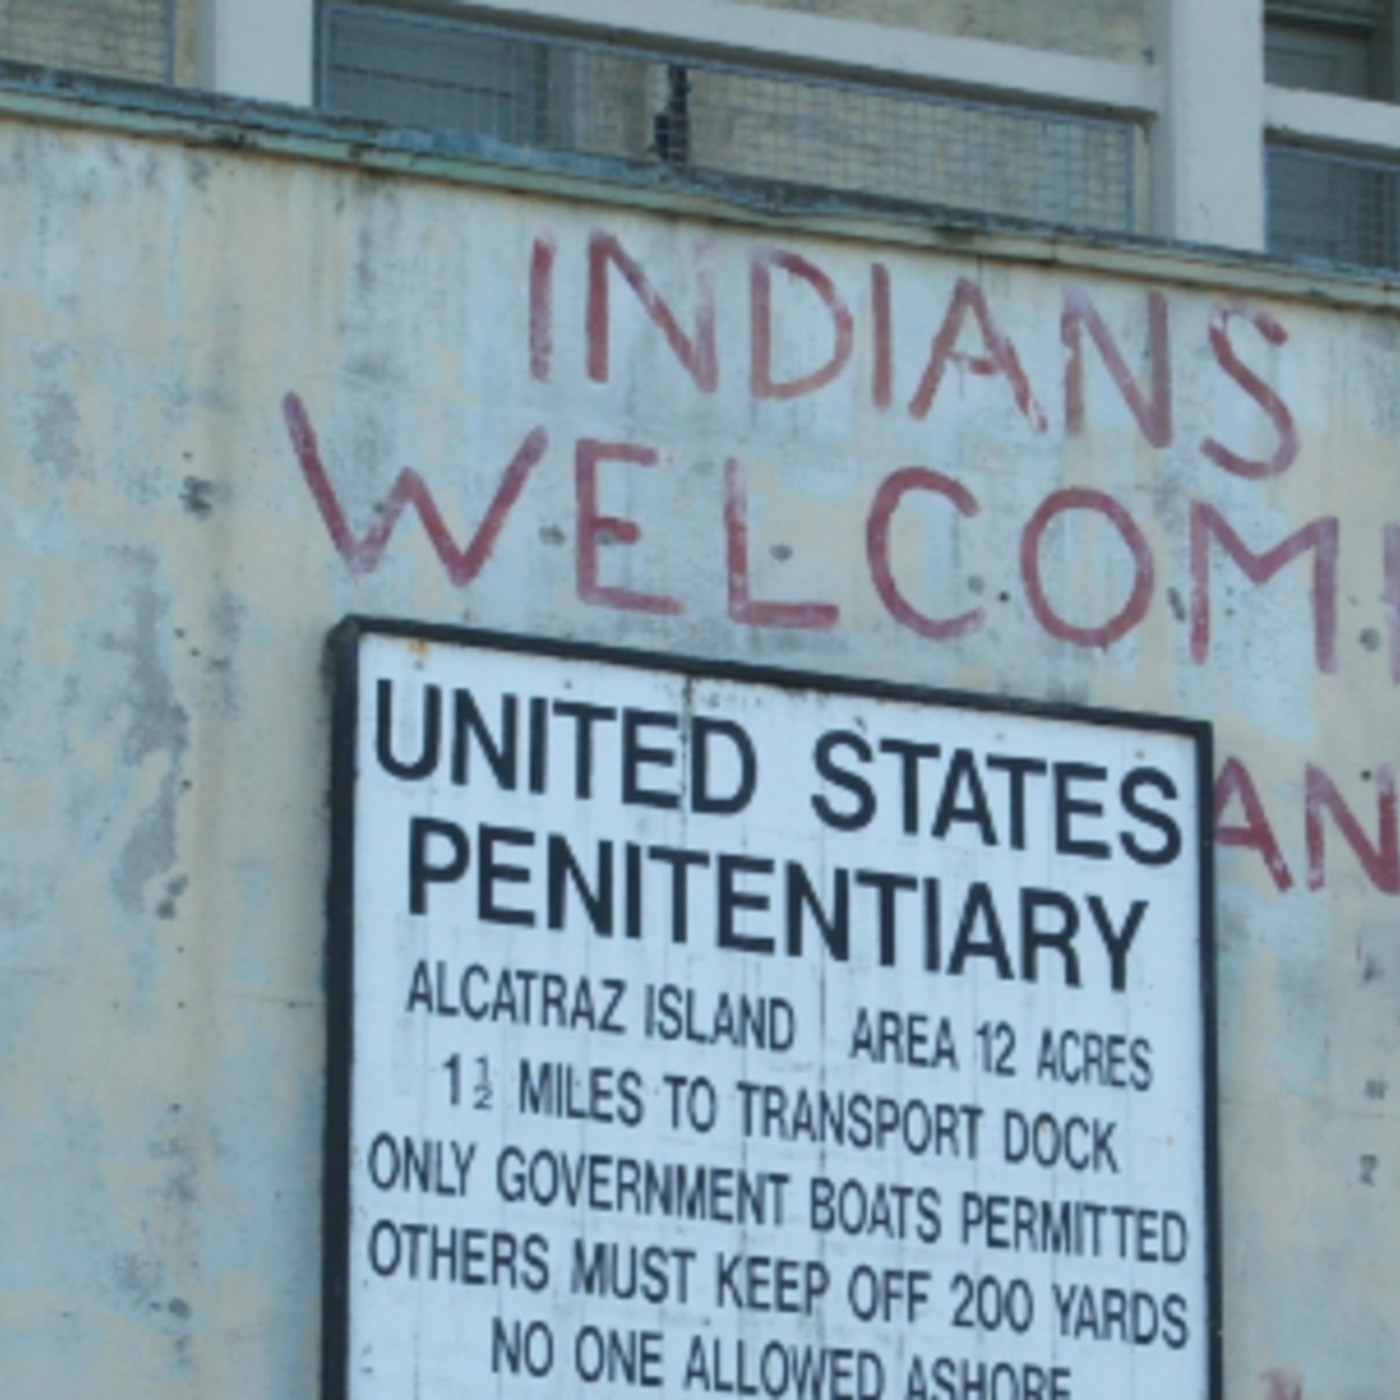 180 - The Occupation of Alcatraz